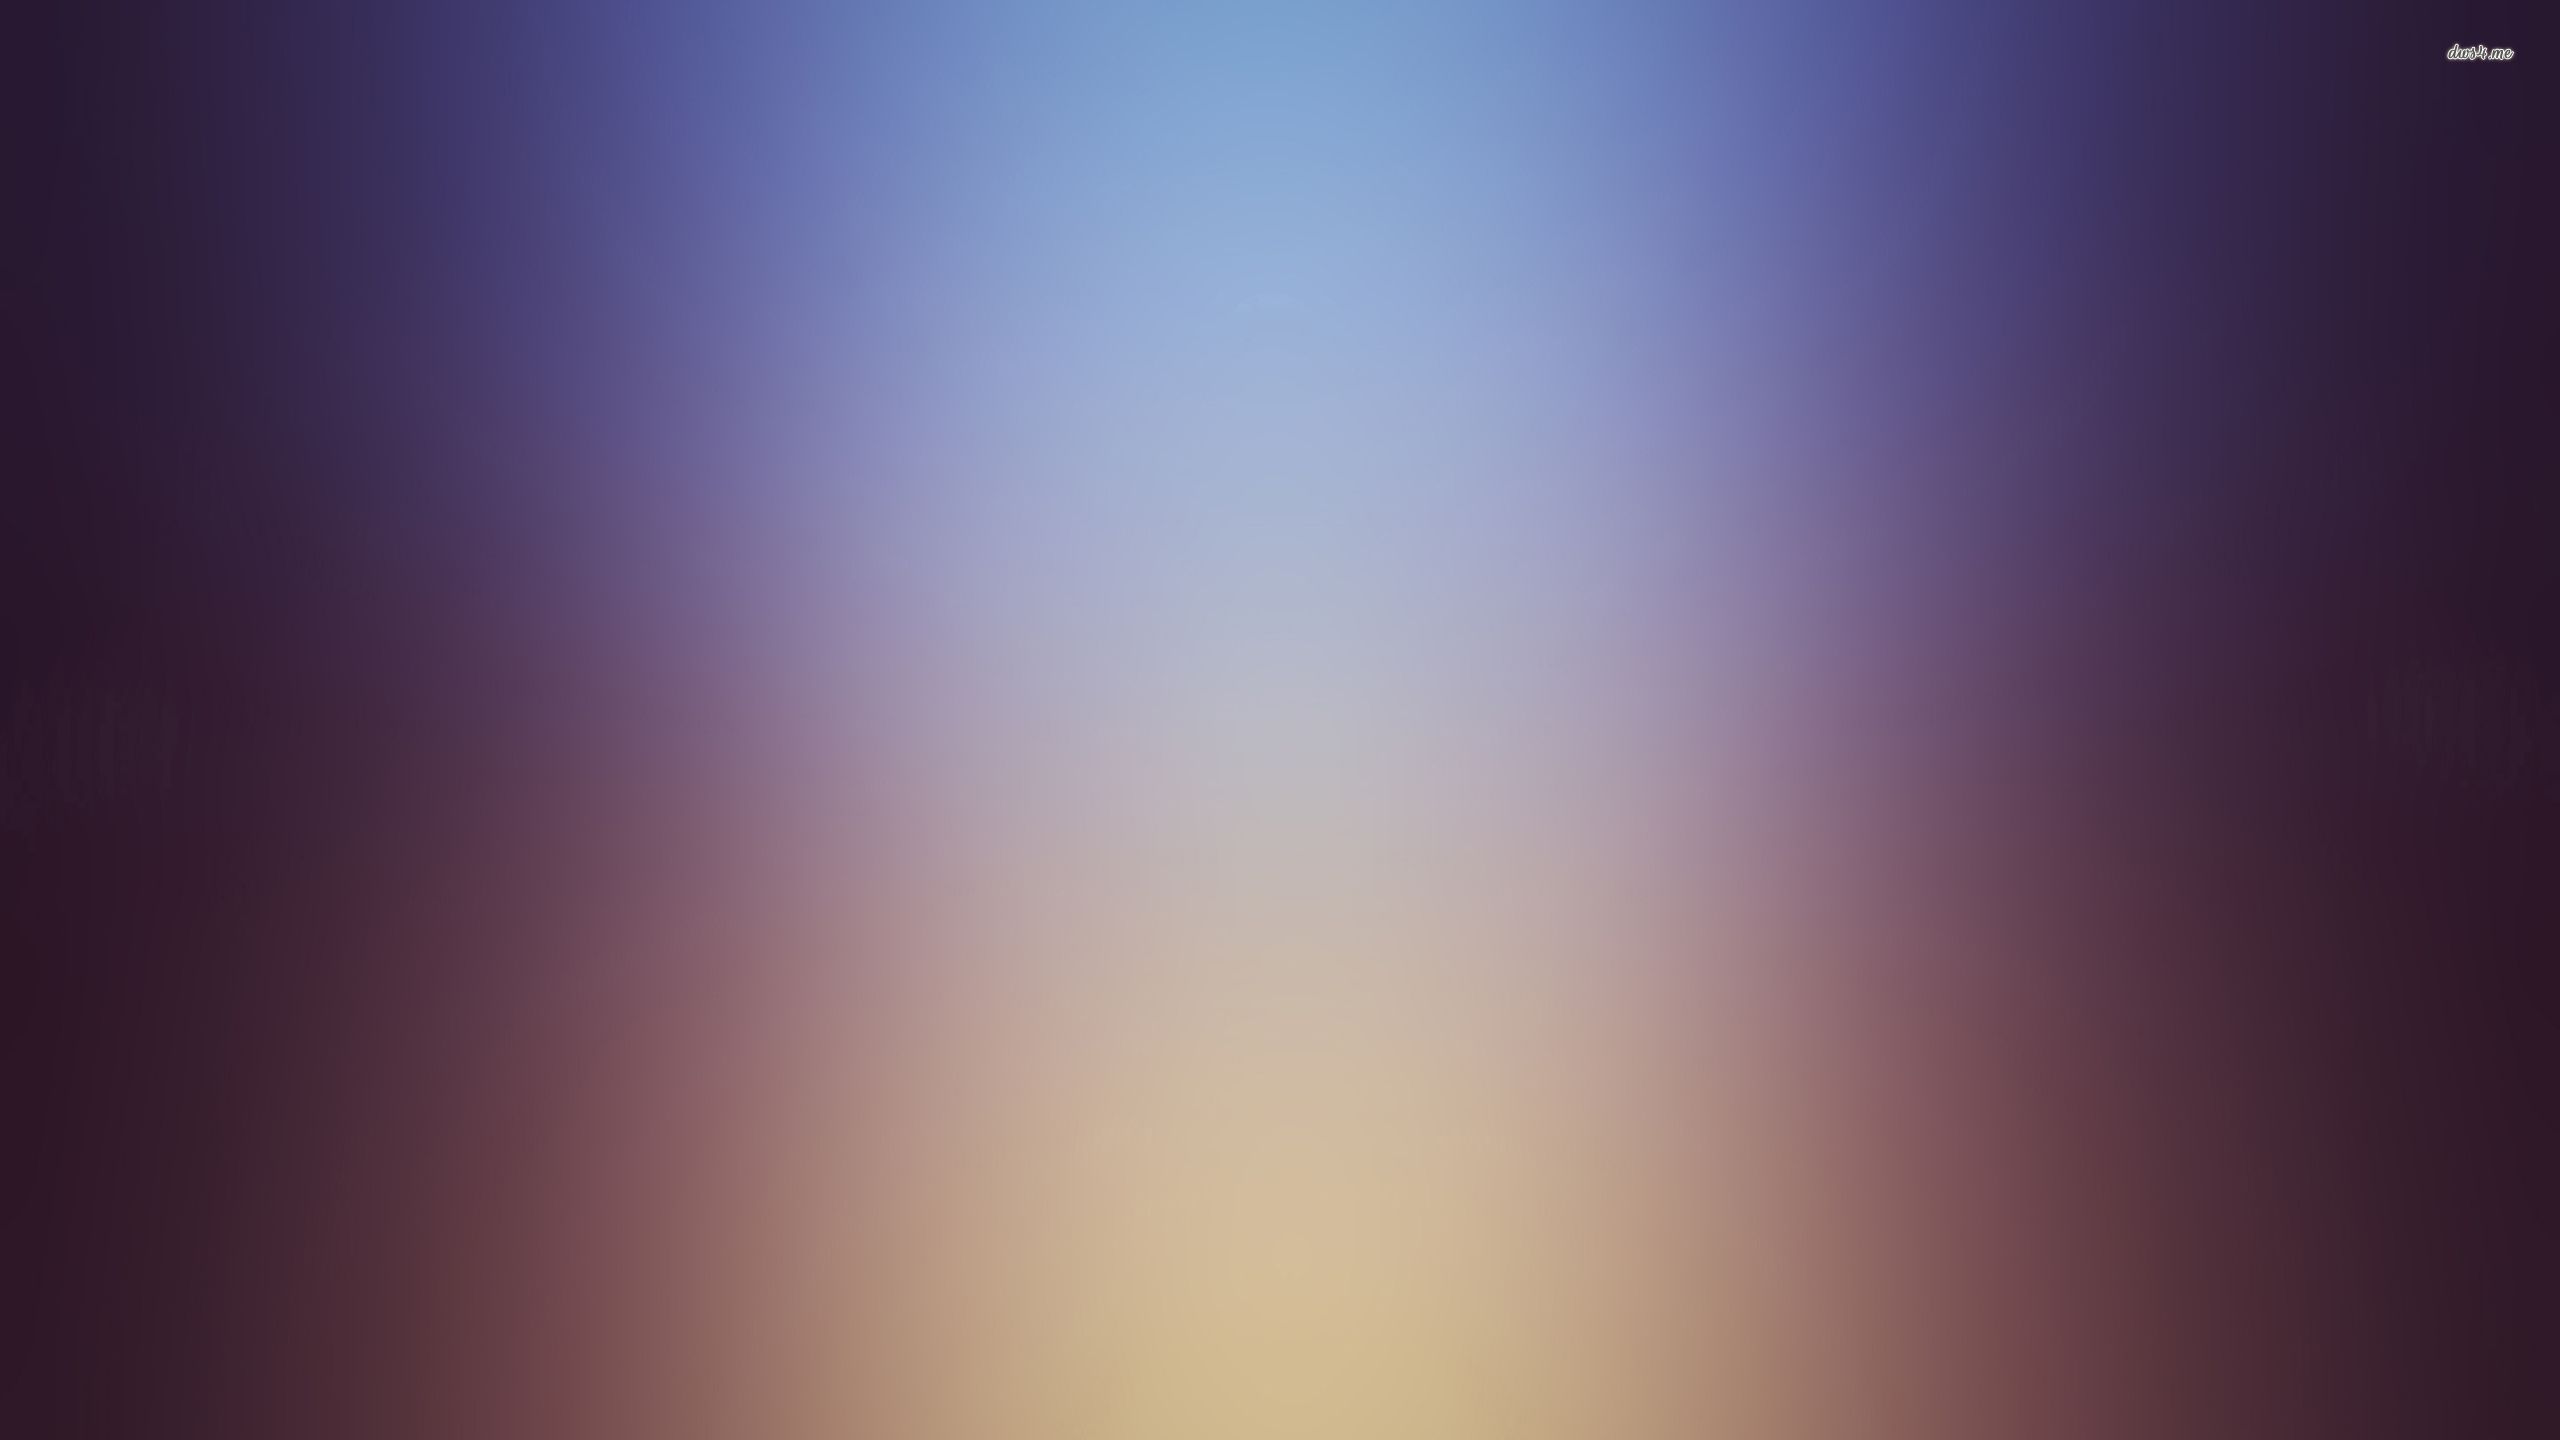 Blur wallpaper - Abstract wallpapers - #37558